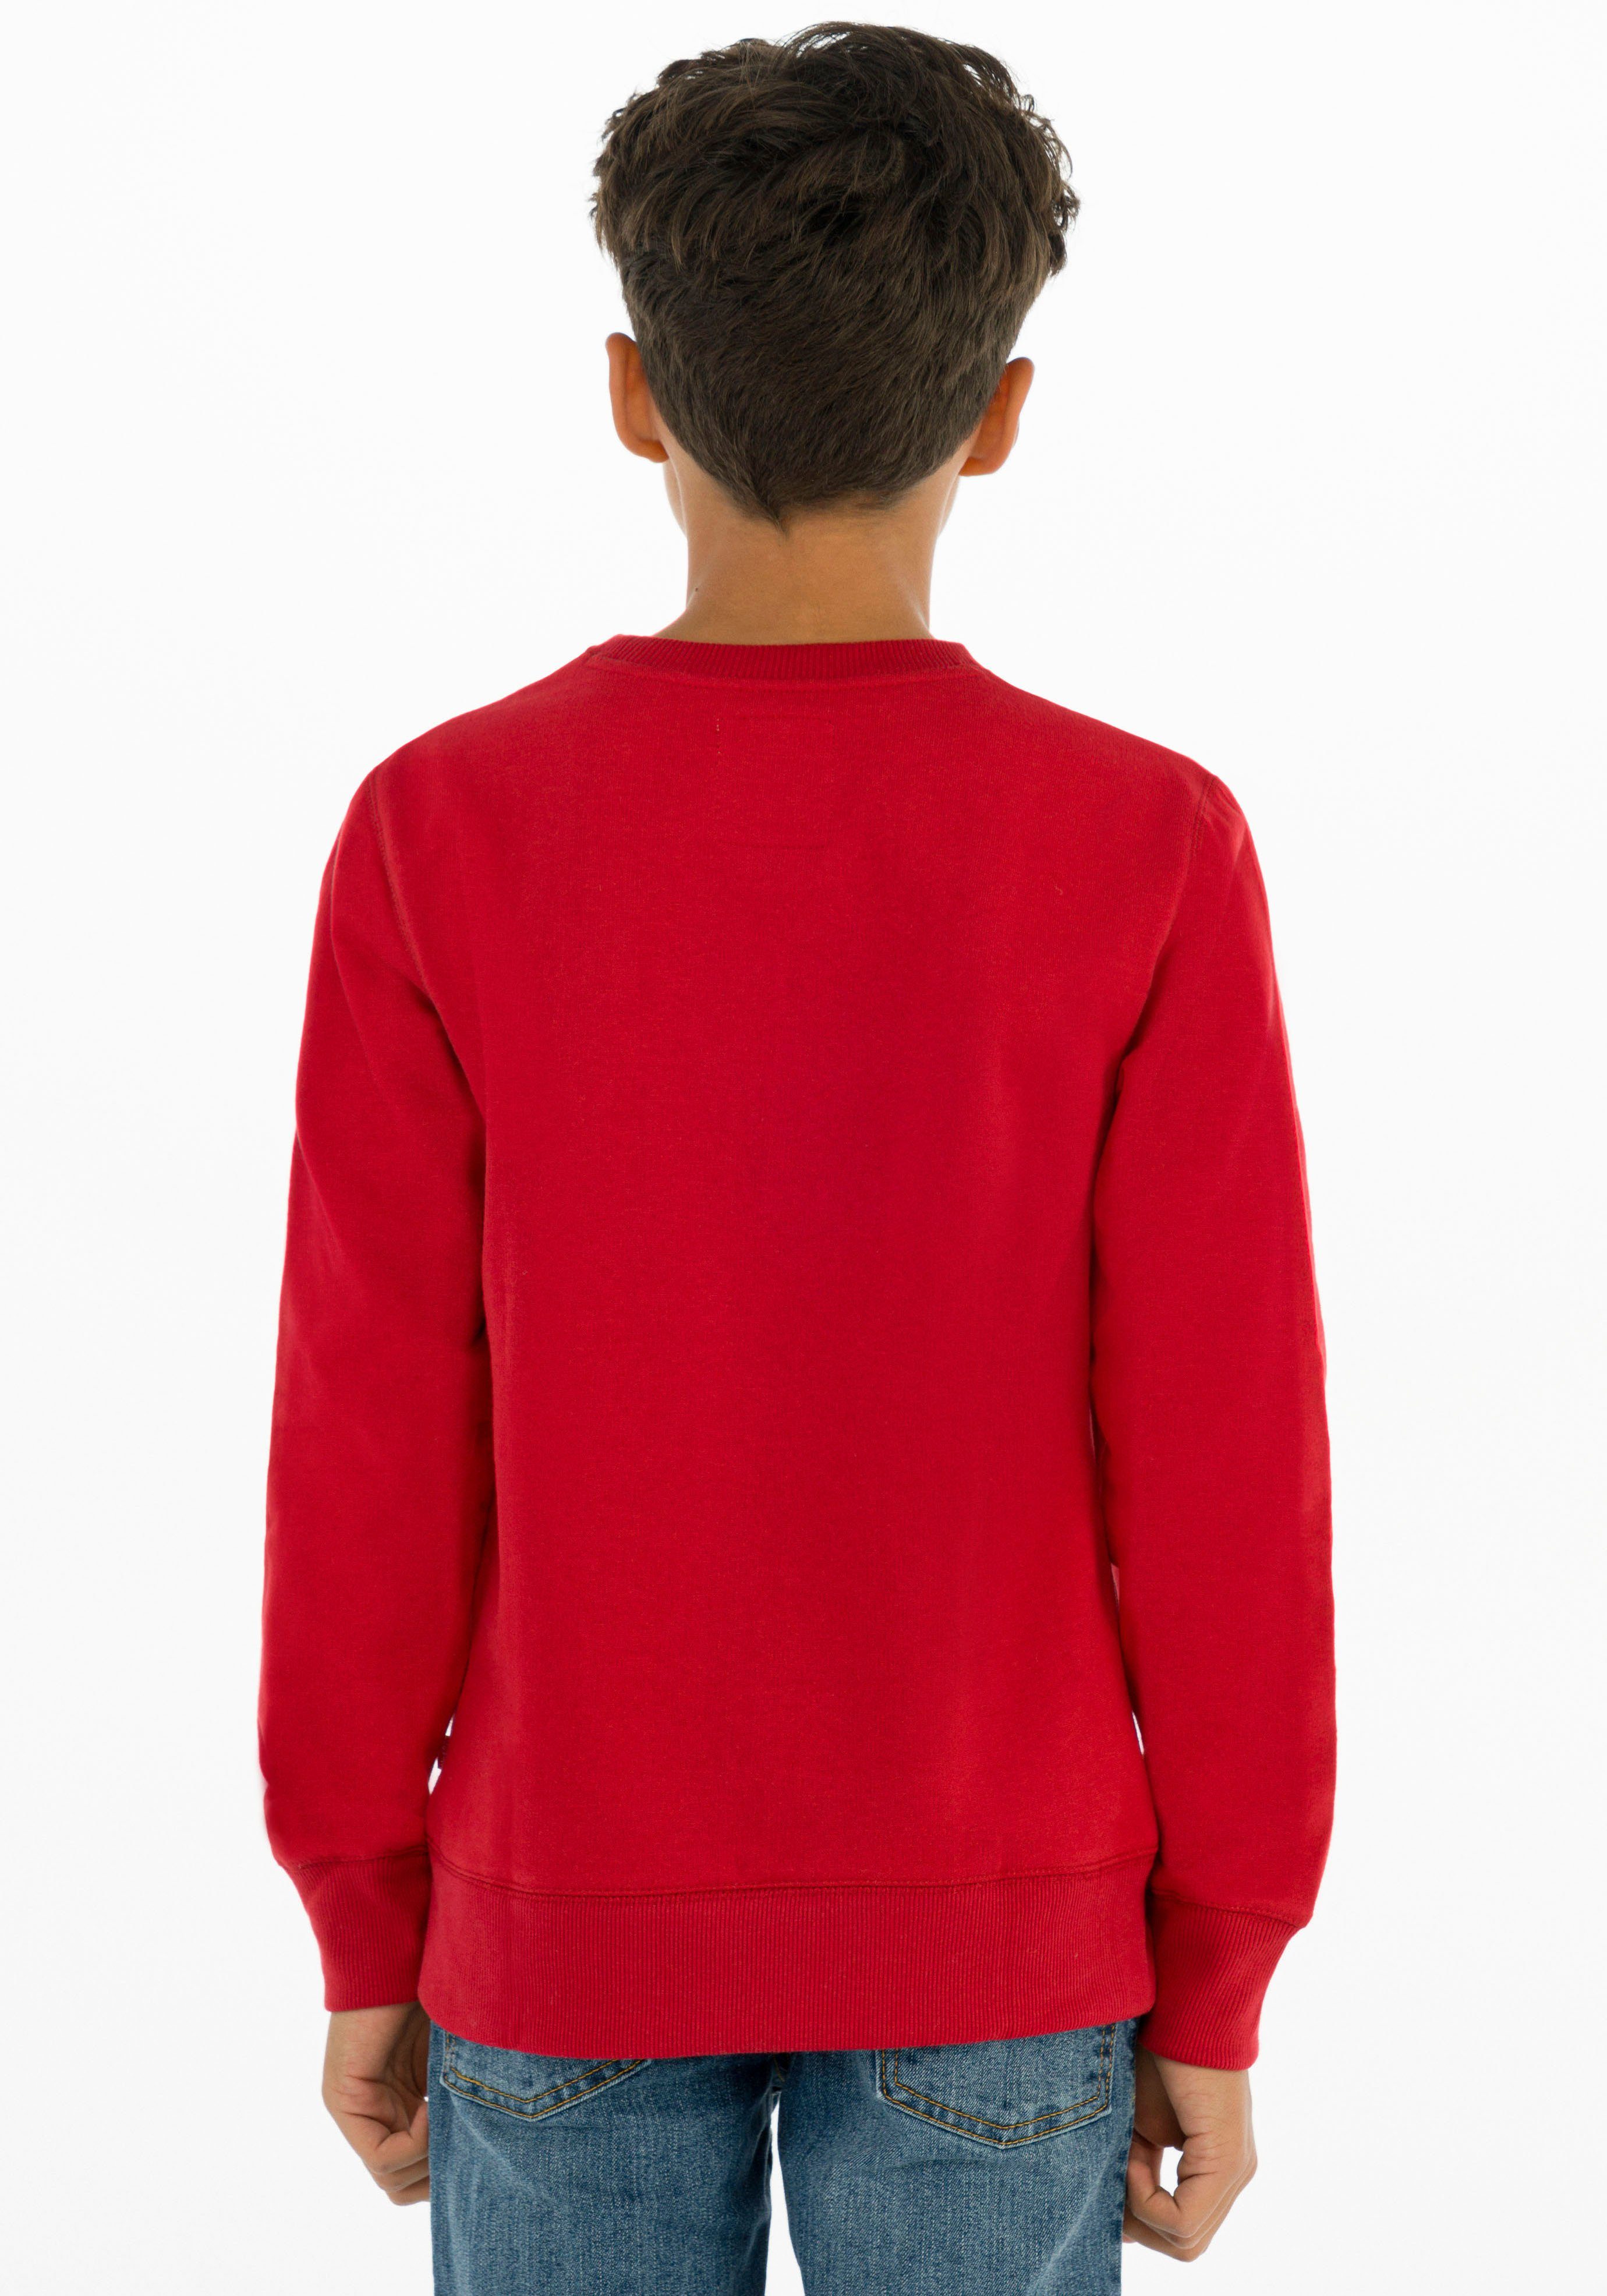 for BOYS CREWNECK BATWING Levi's® red Kids Sweatshirt